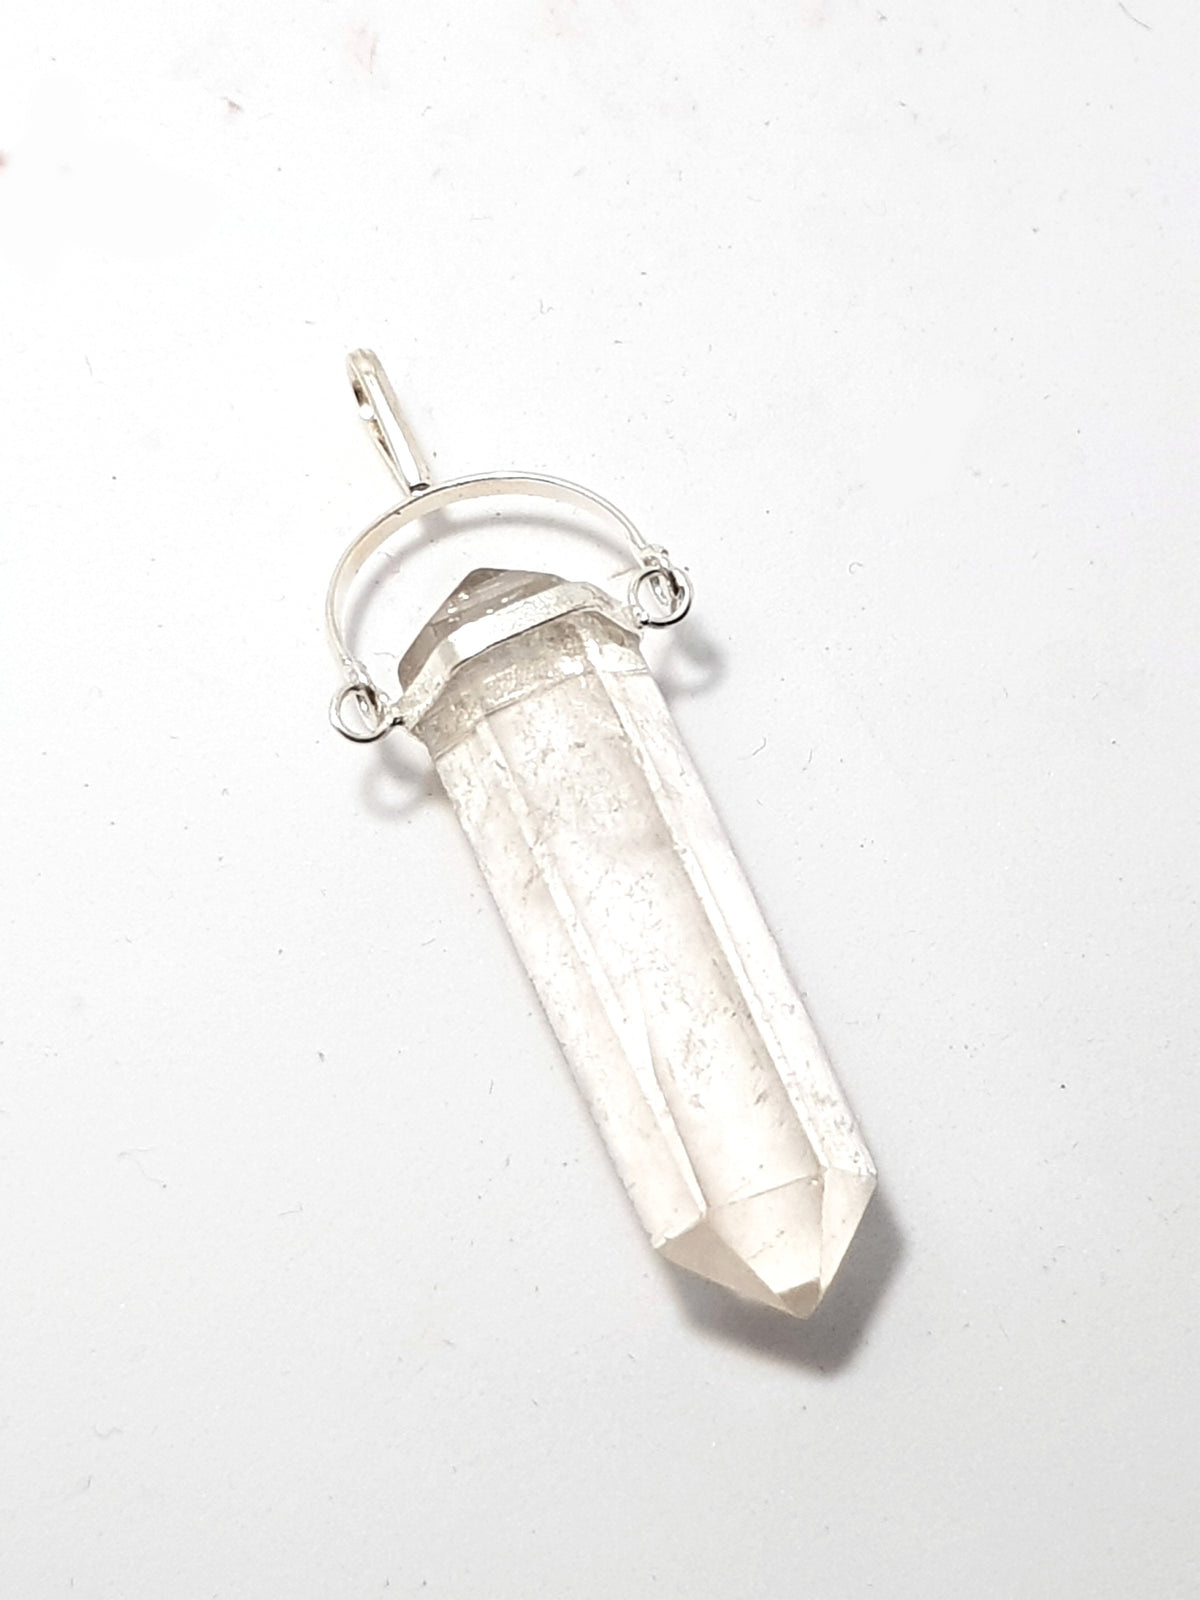 quartz pendant with metal bezel